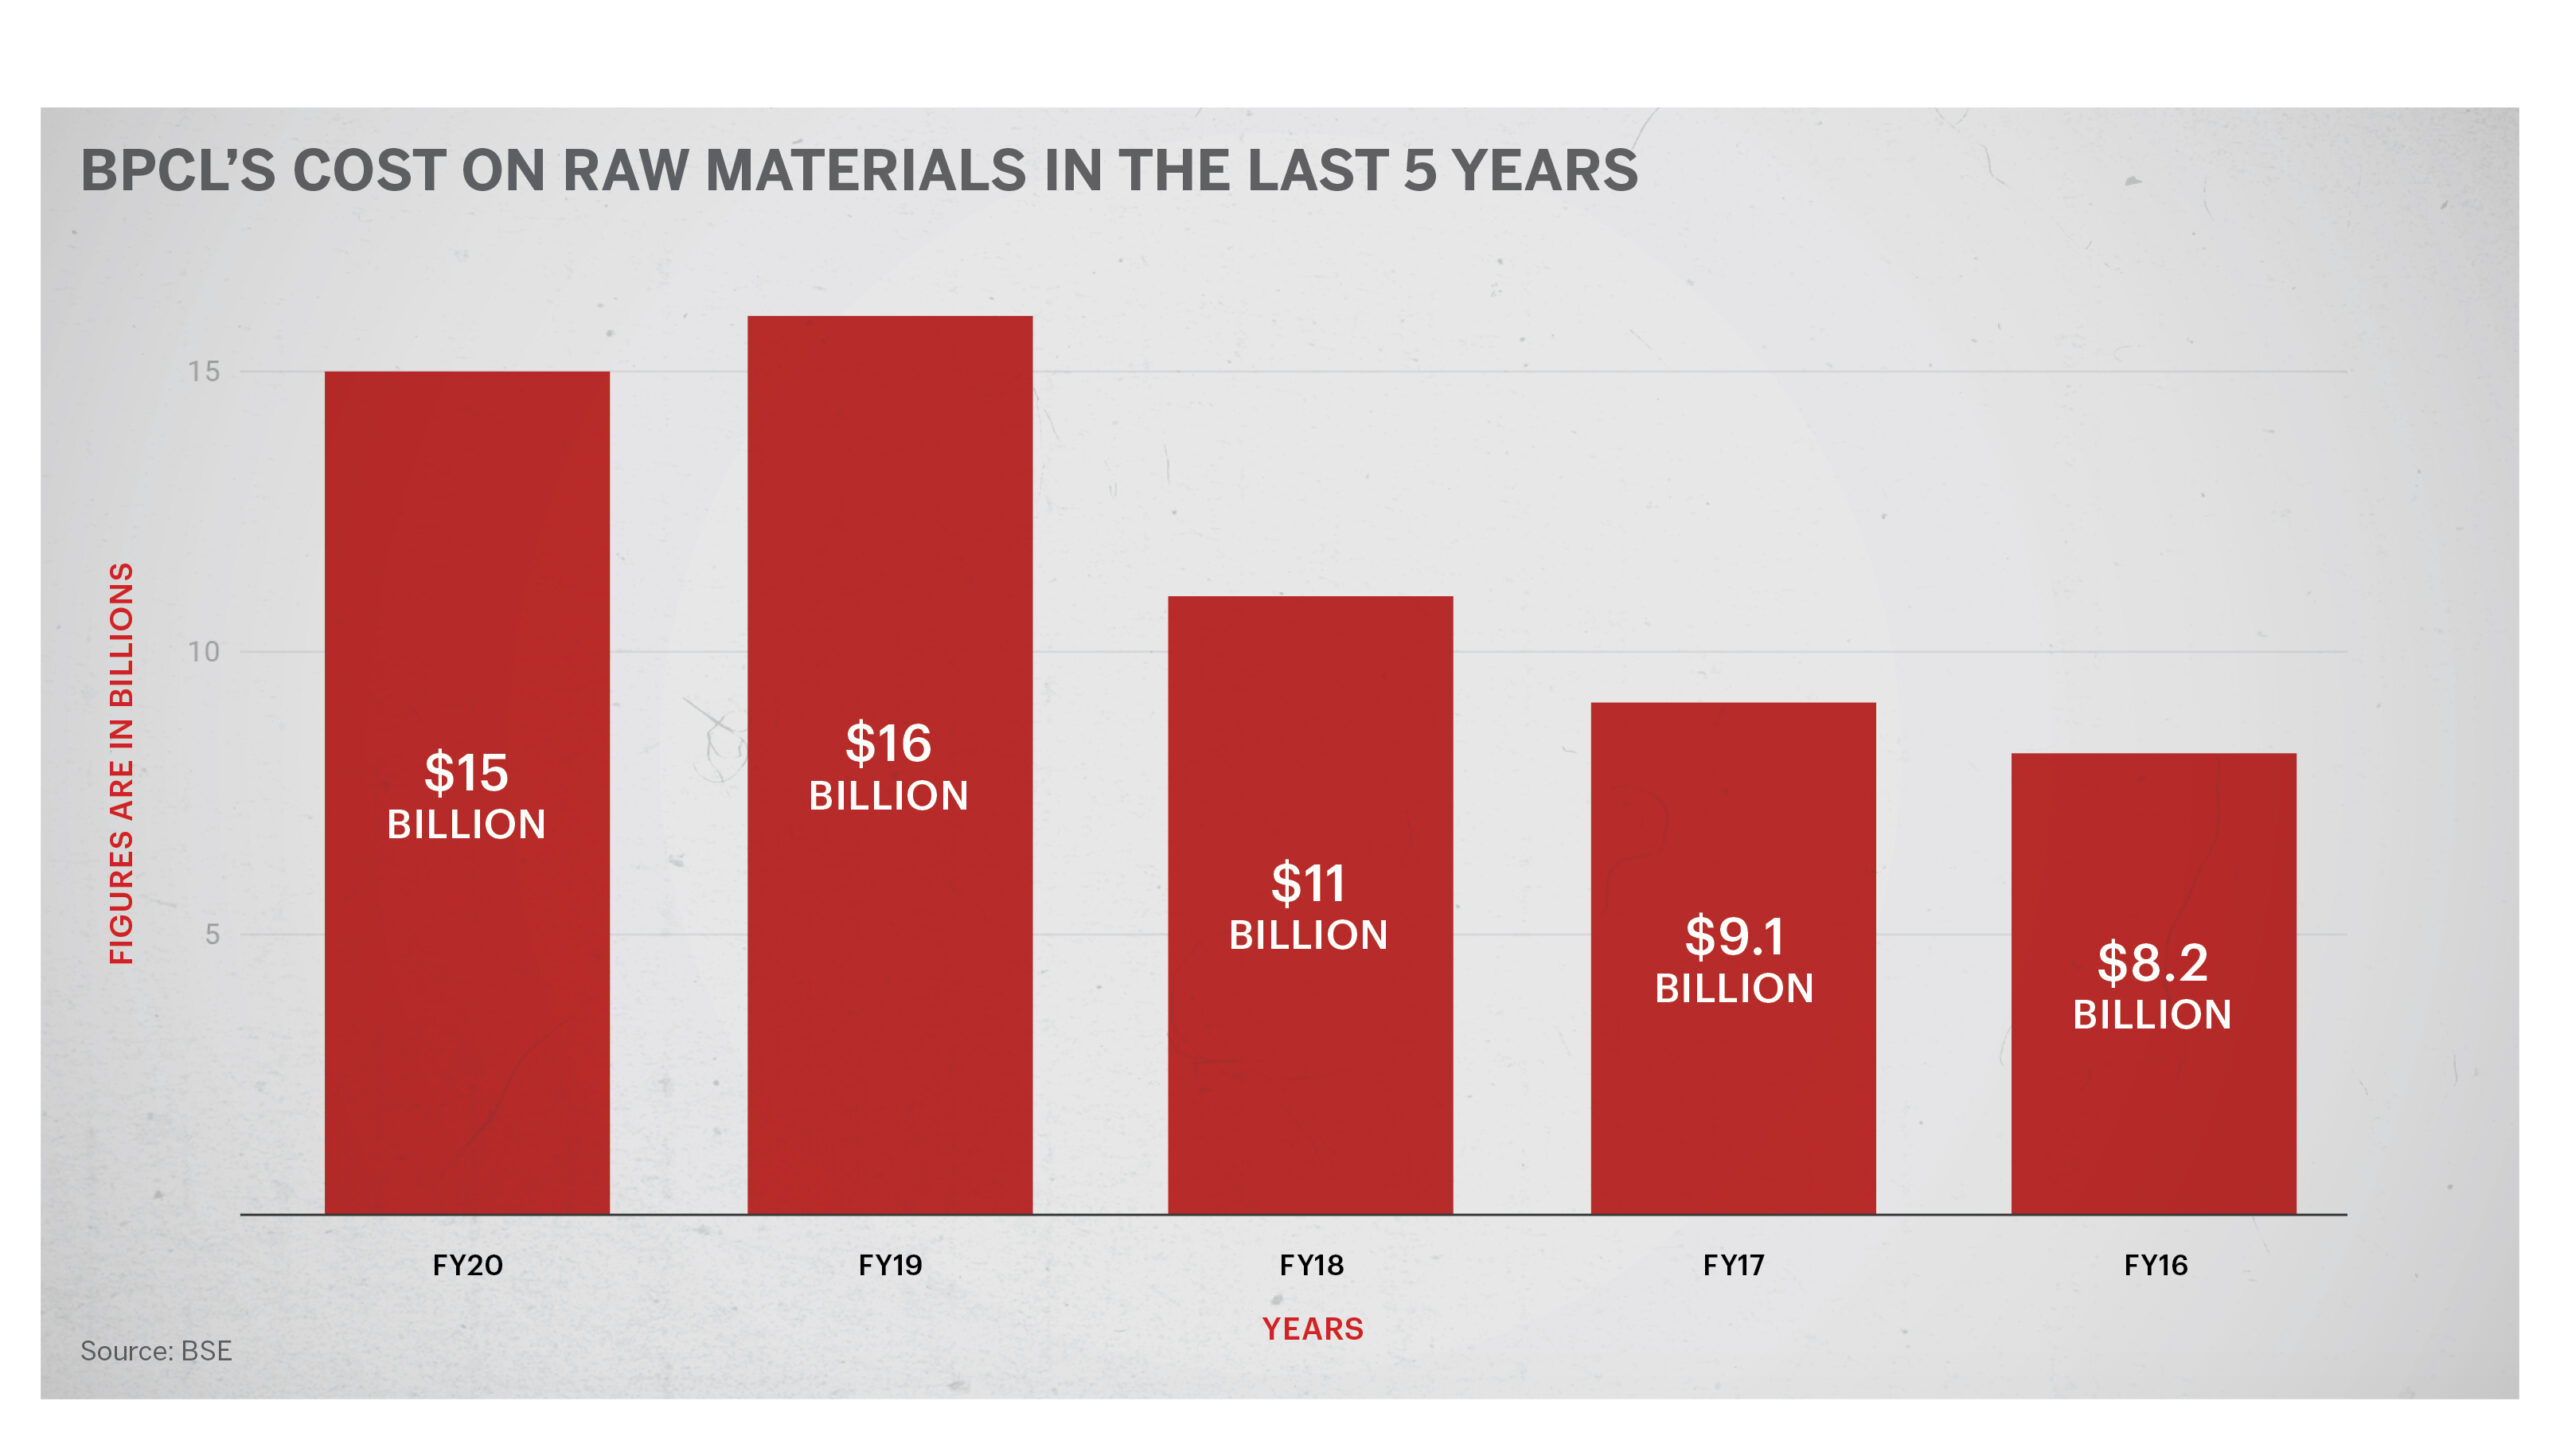 BPCL's raw materials cost